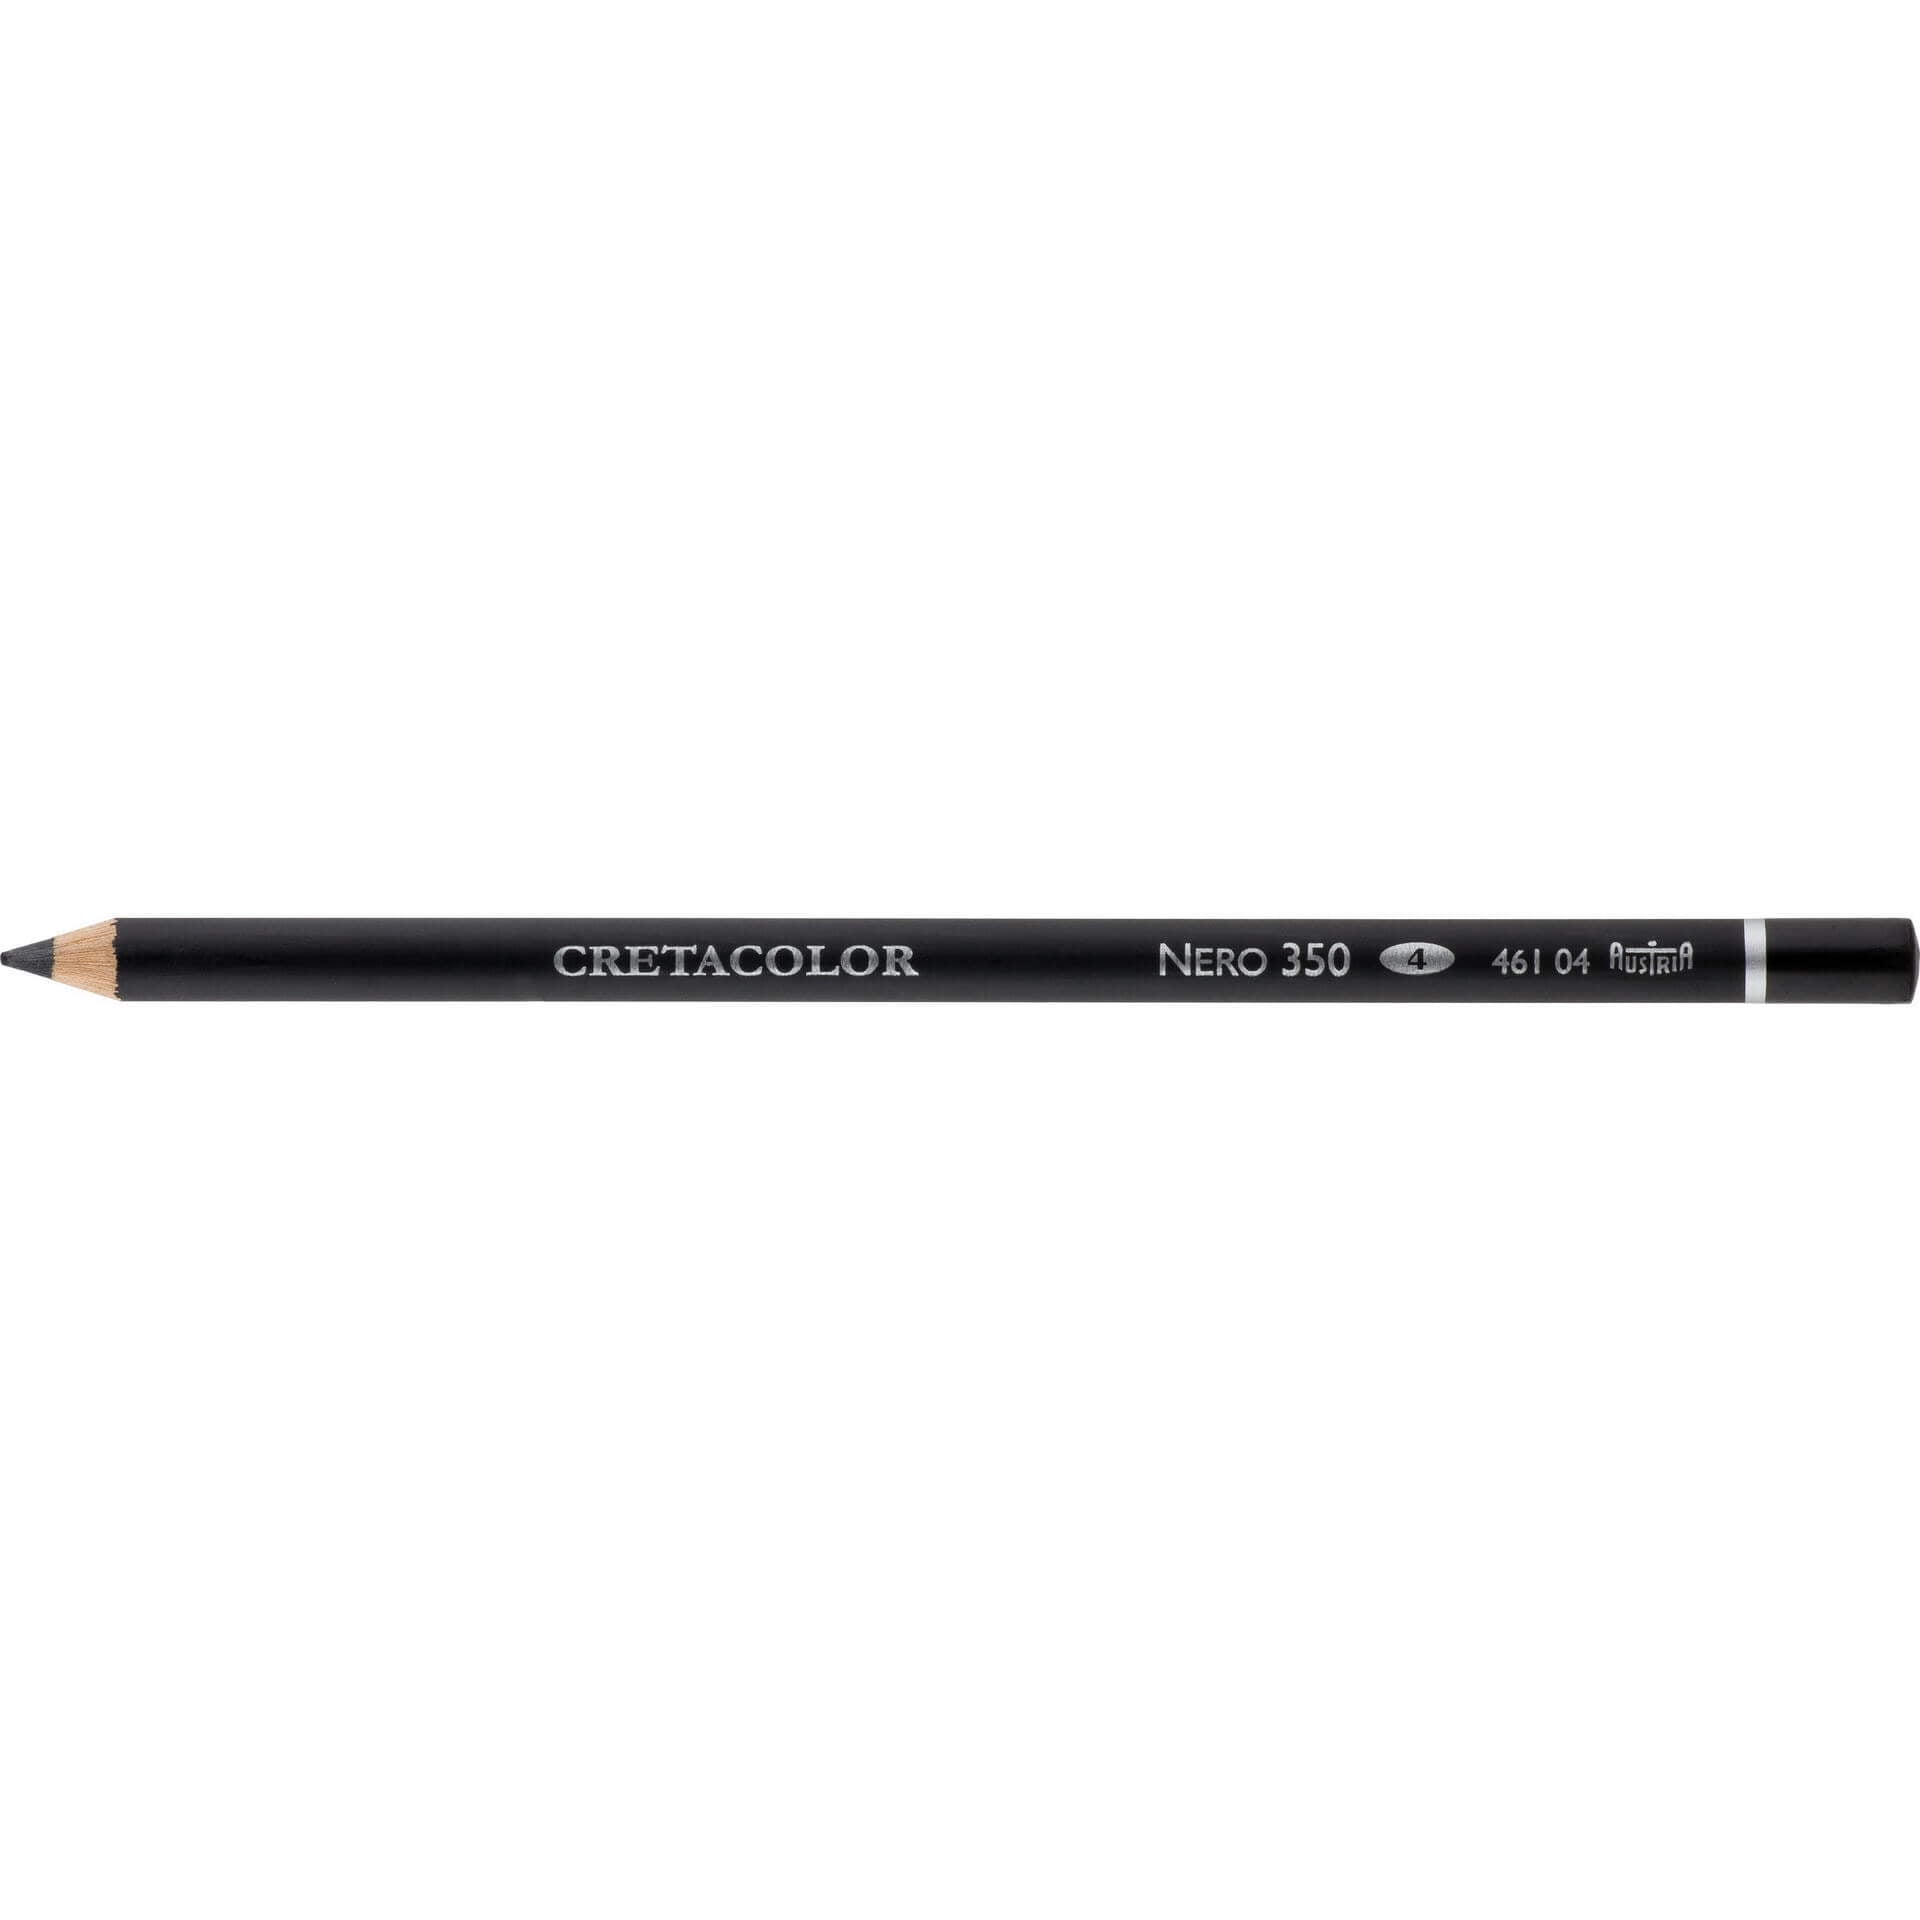 Cretacolor Nero Oil based Pencil Hard